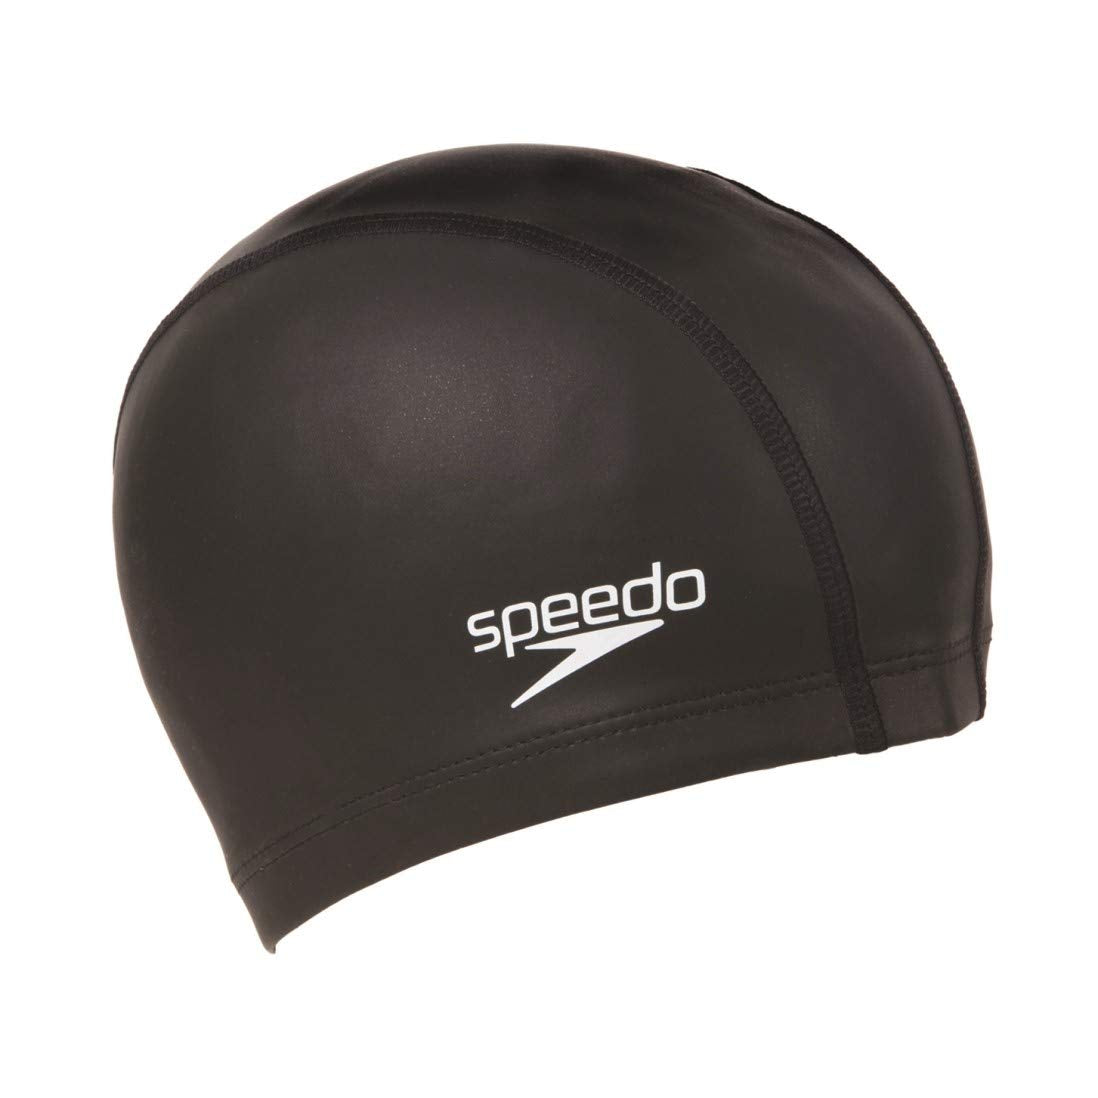 Speedo Ultra Pace Swimming Cap (Black) - Best Price online Prokicksports.com